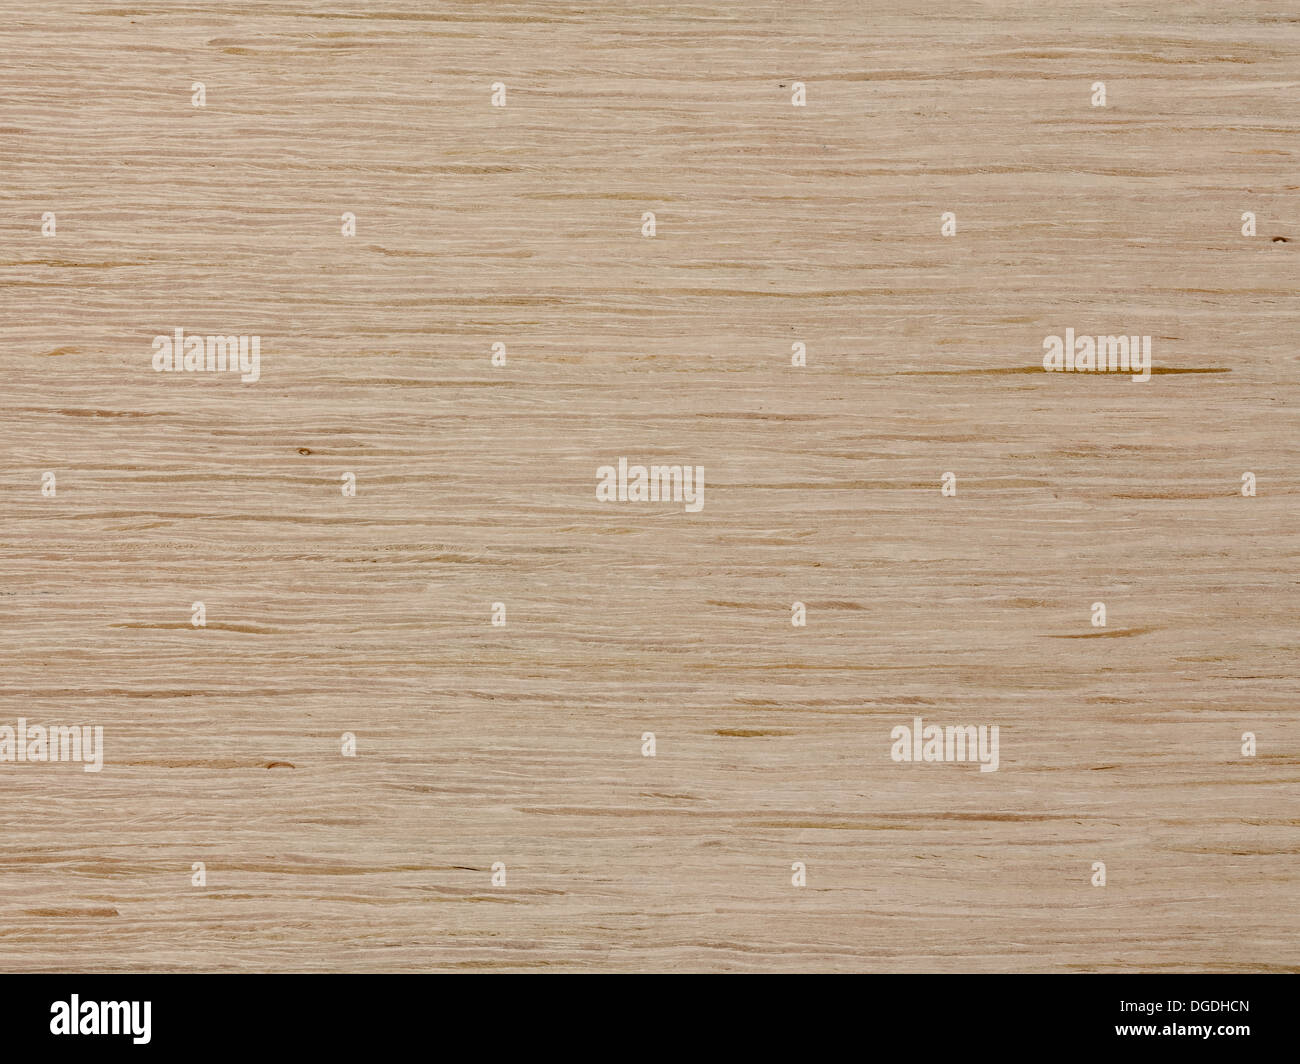 oak wood texture Stock Photo